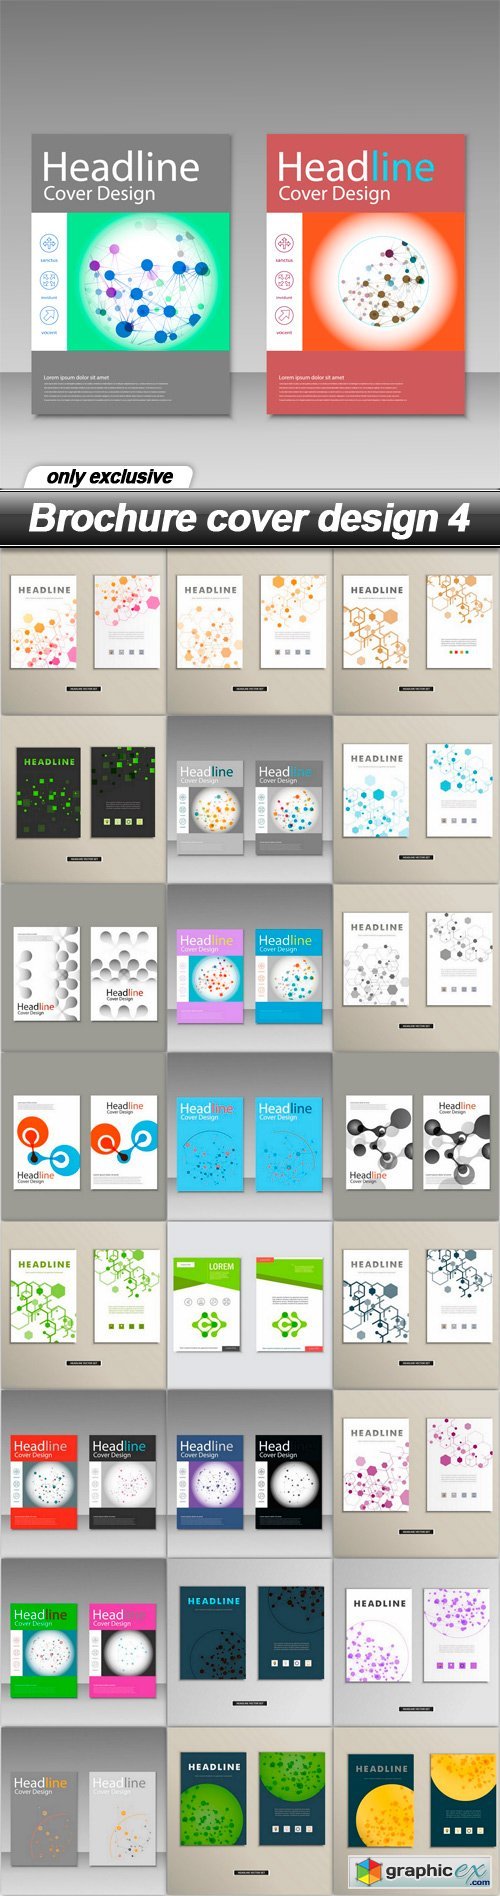 Brochure cover design 4 - 25 EPS